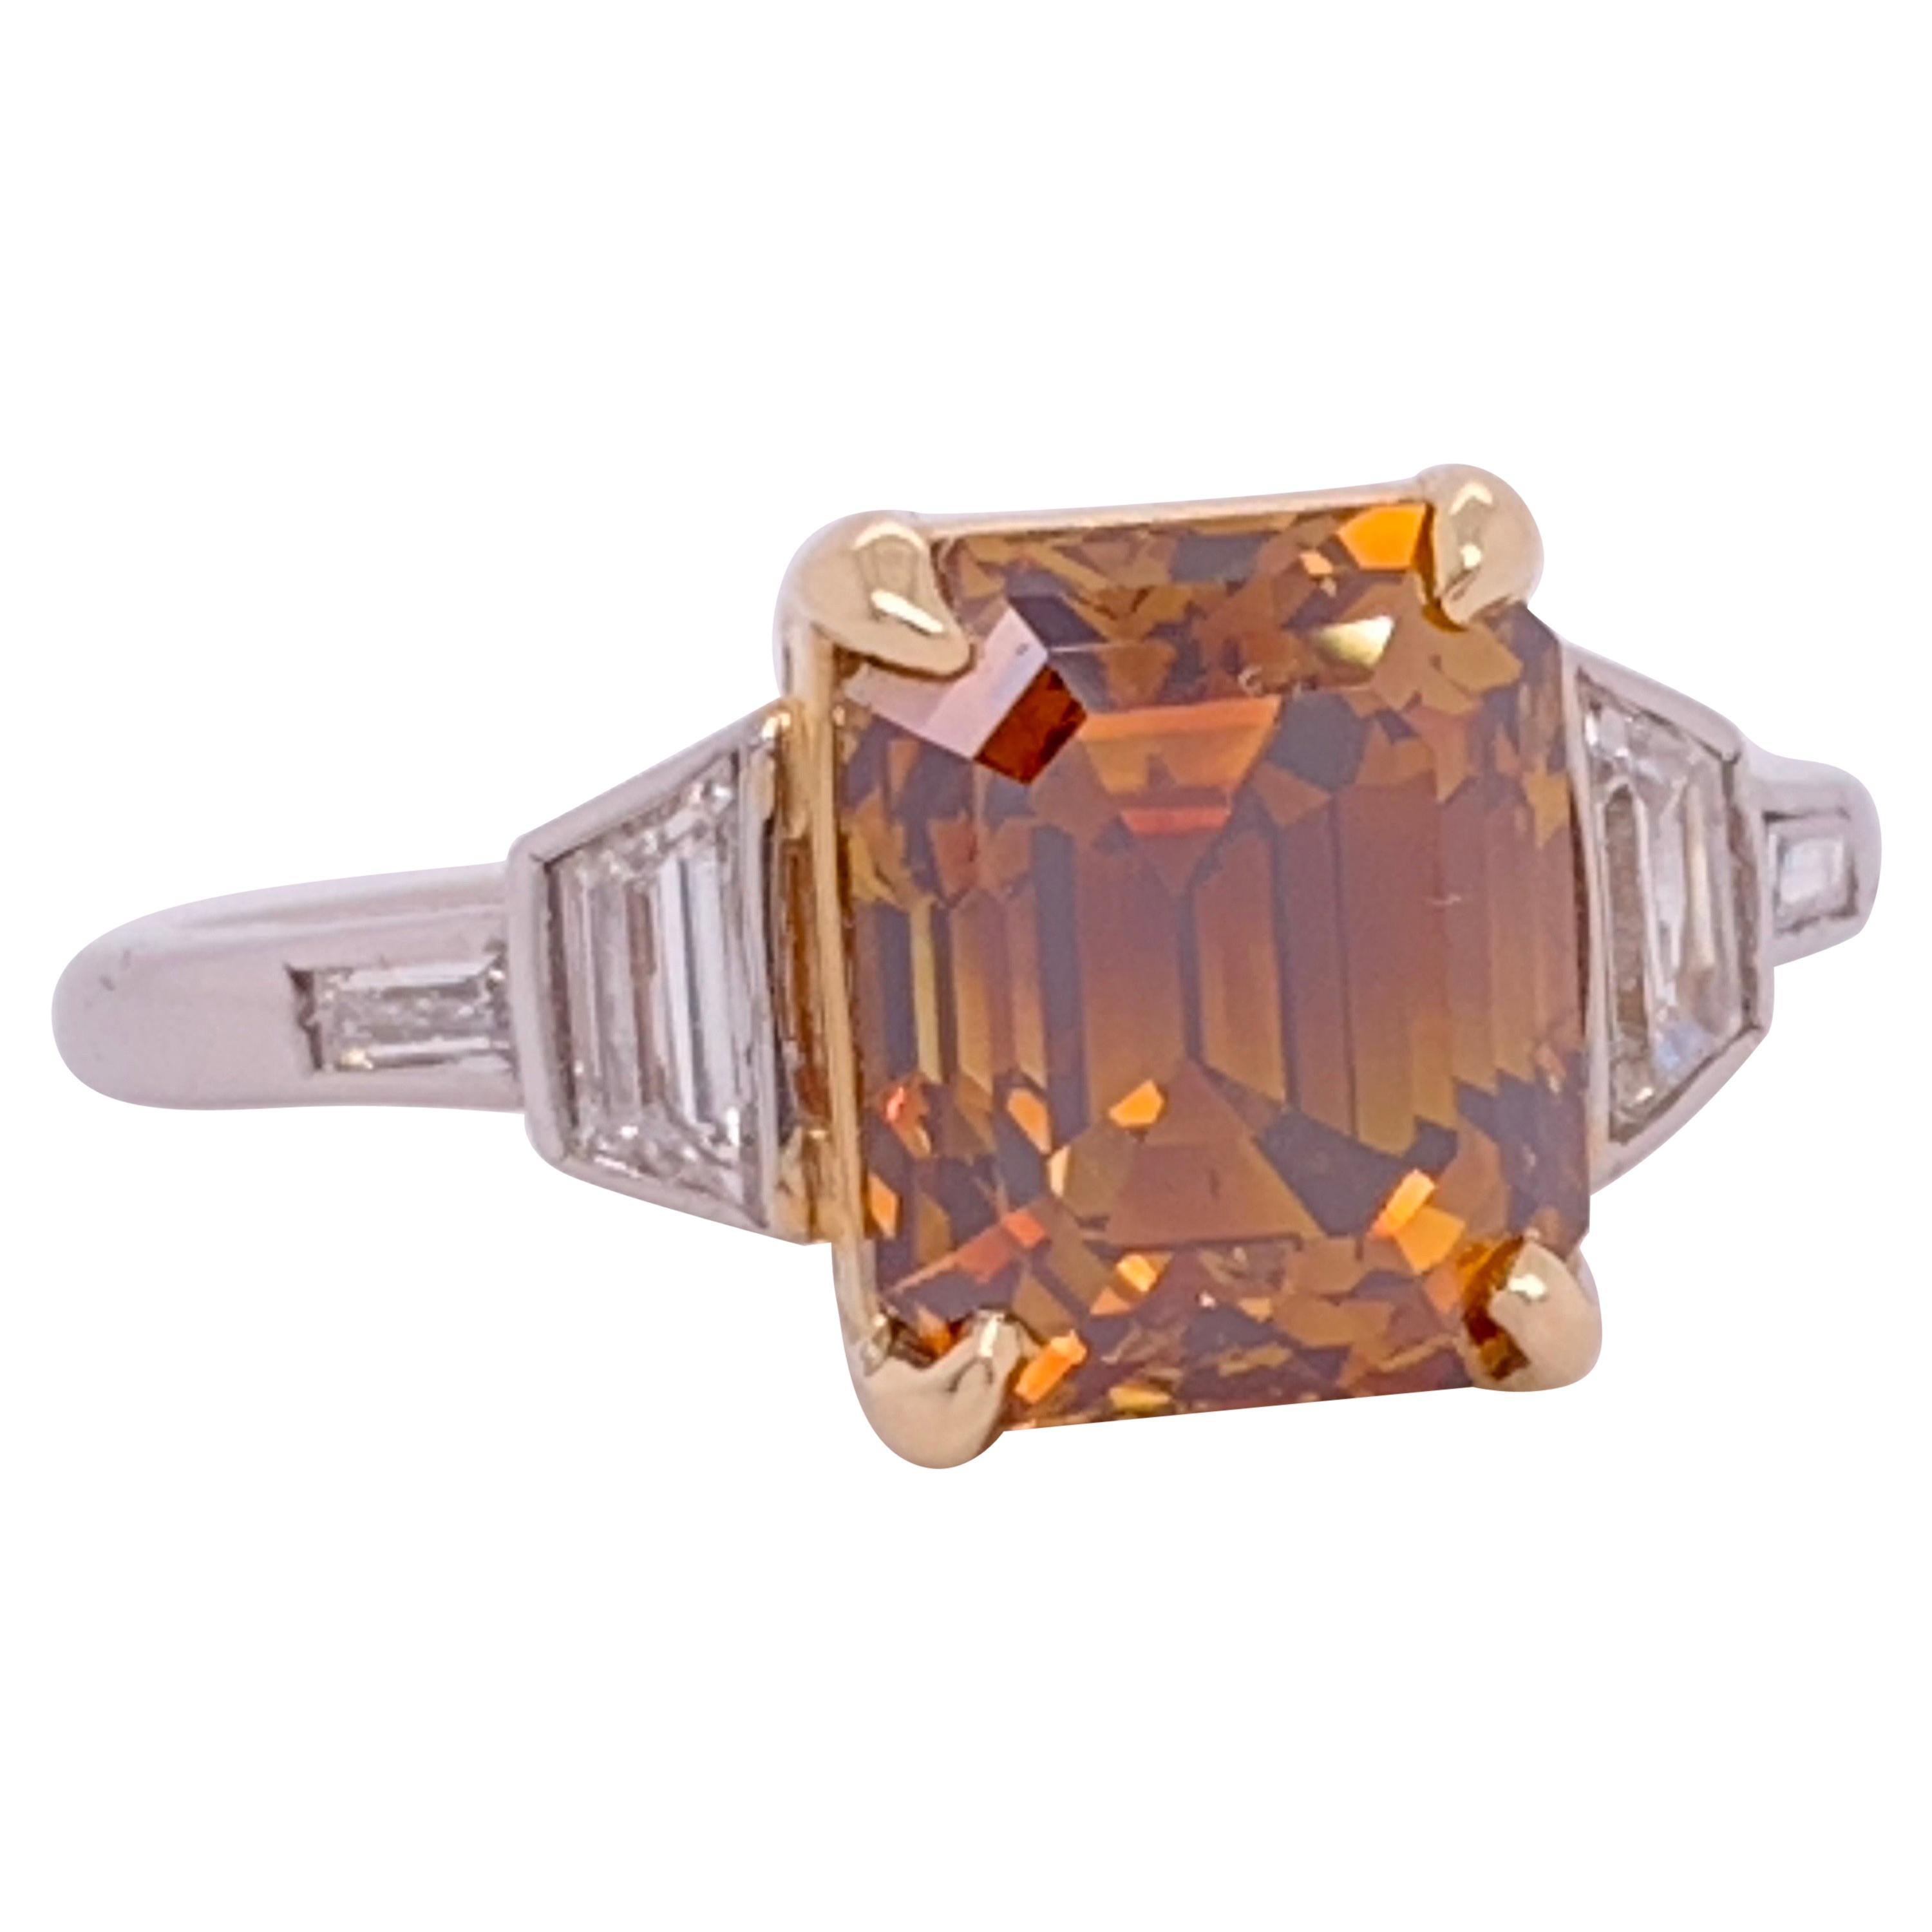 Platinum Natural Emerald Cut Diamond Ring GIA 3.37 Carat Fancy Deep Orange-Brown For Sale